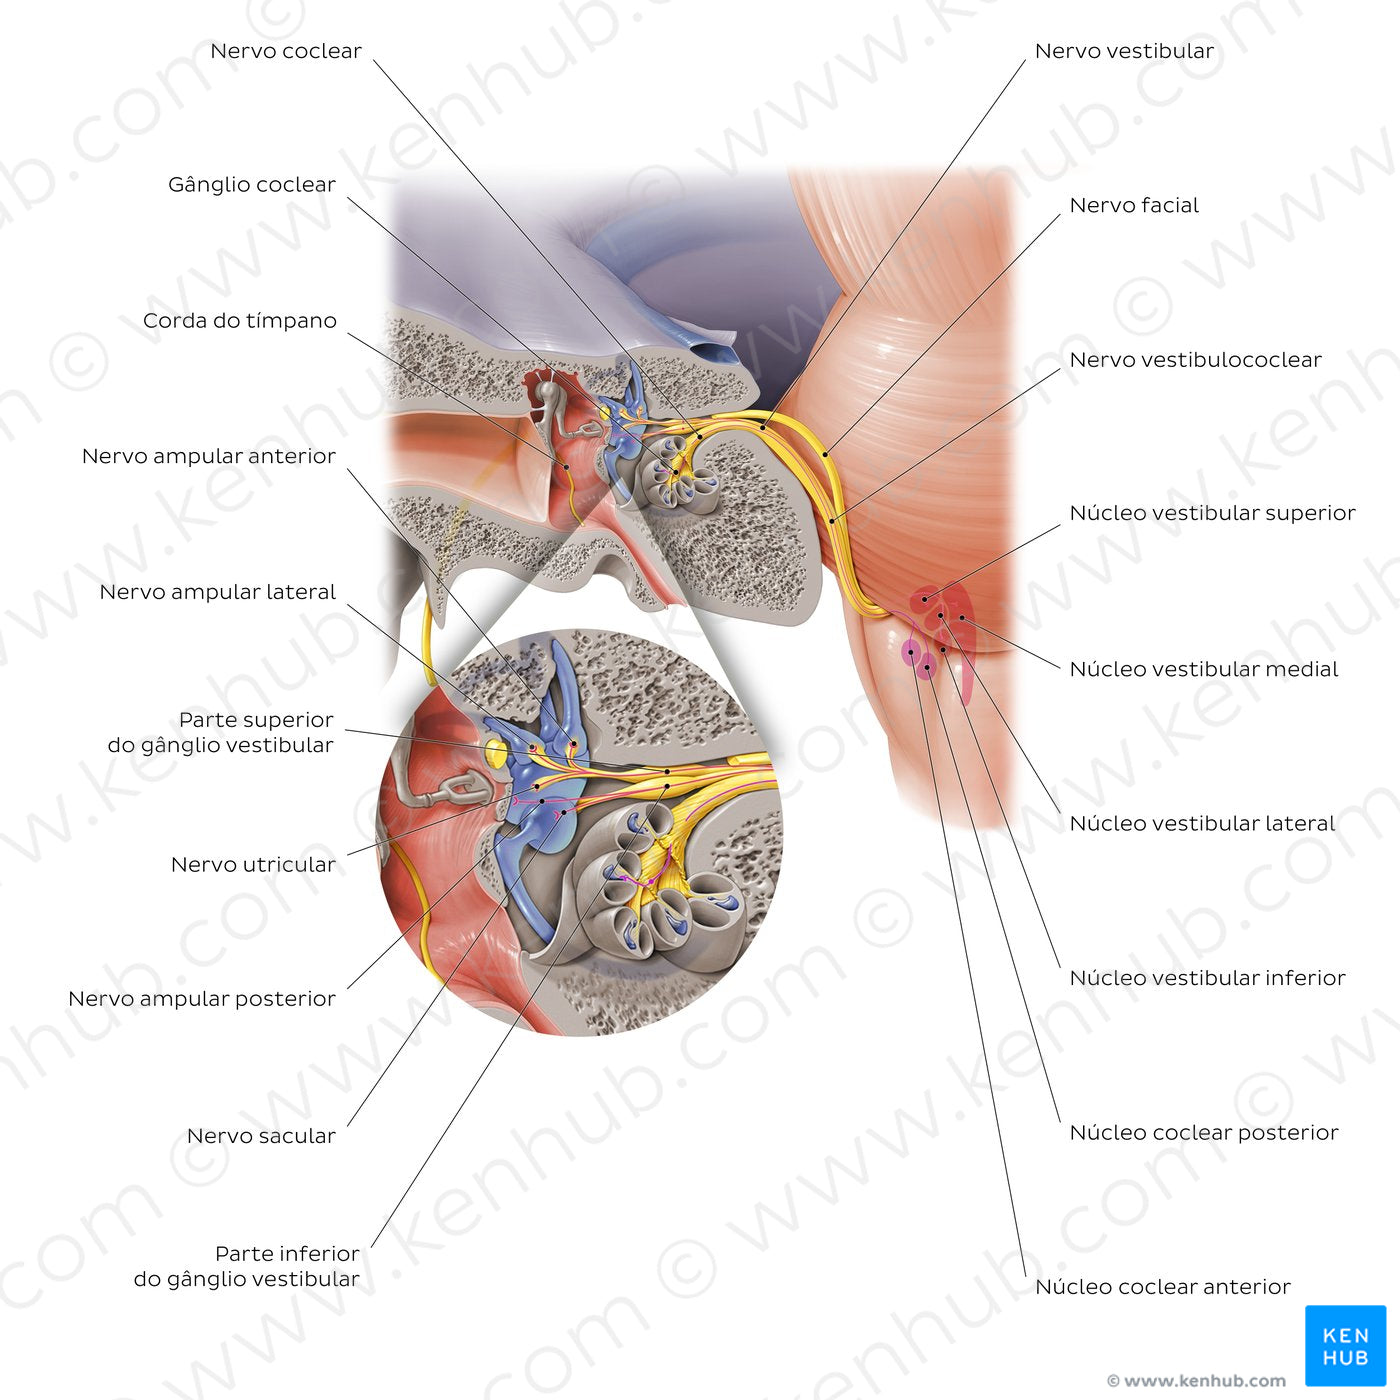 Vestibulocochlear nerve (Portuguese)